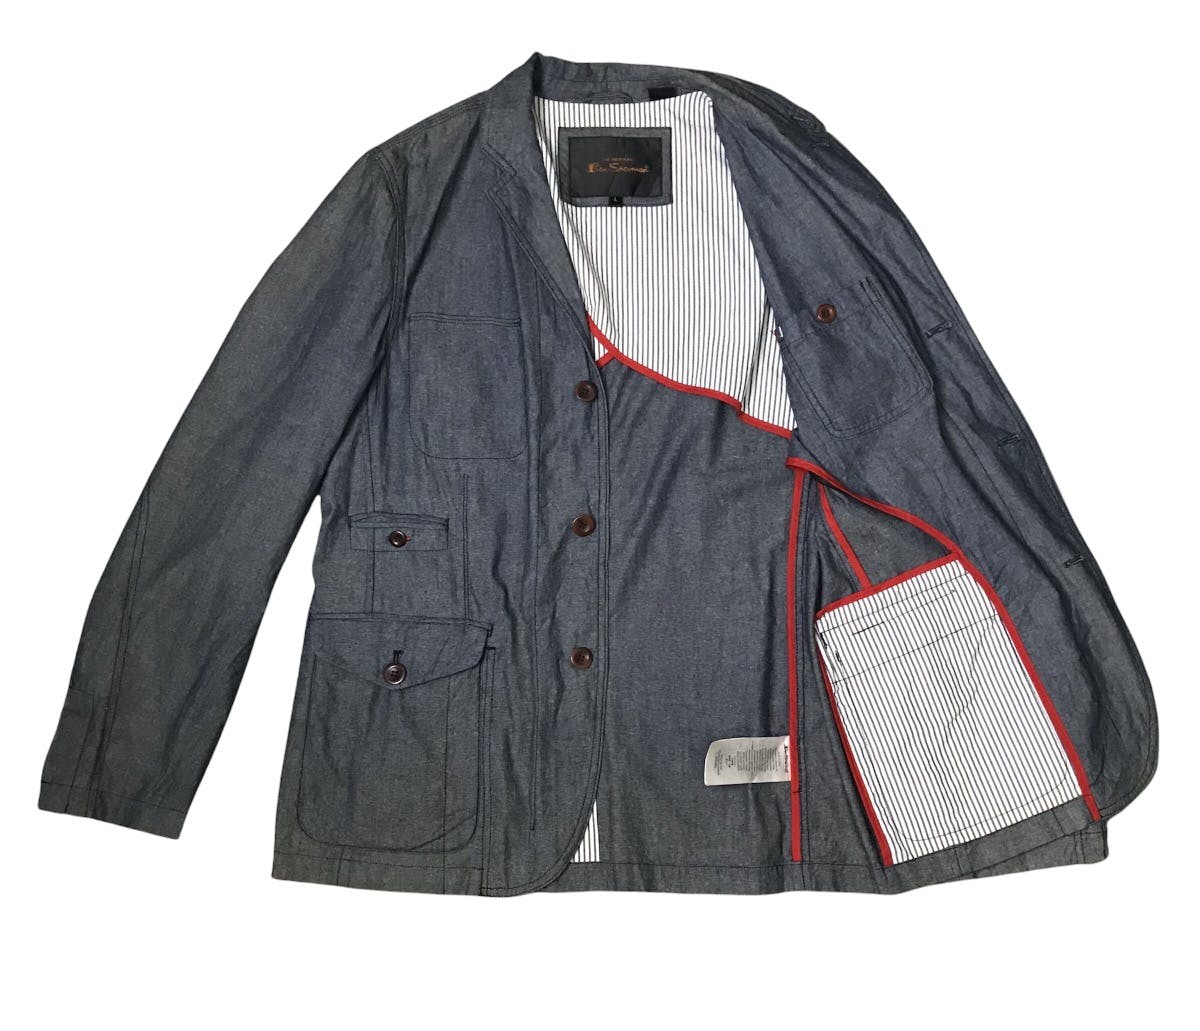 Ben sherman linen chore jacket - 2